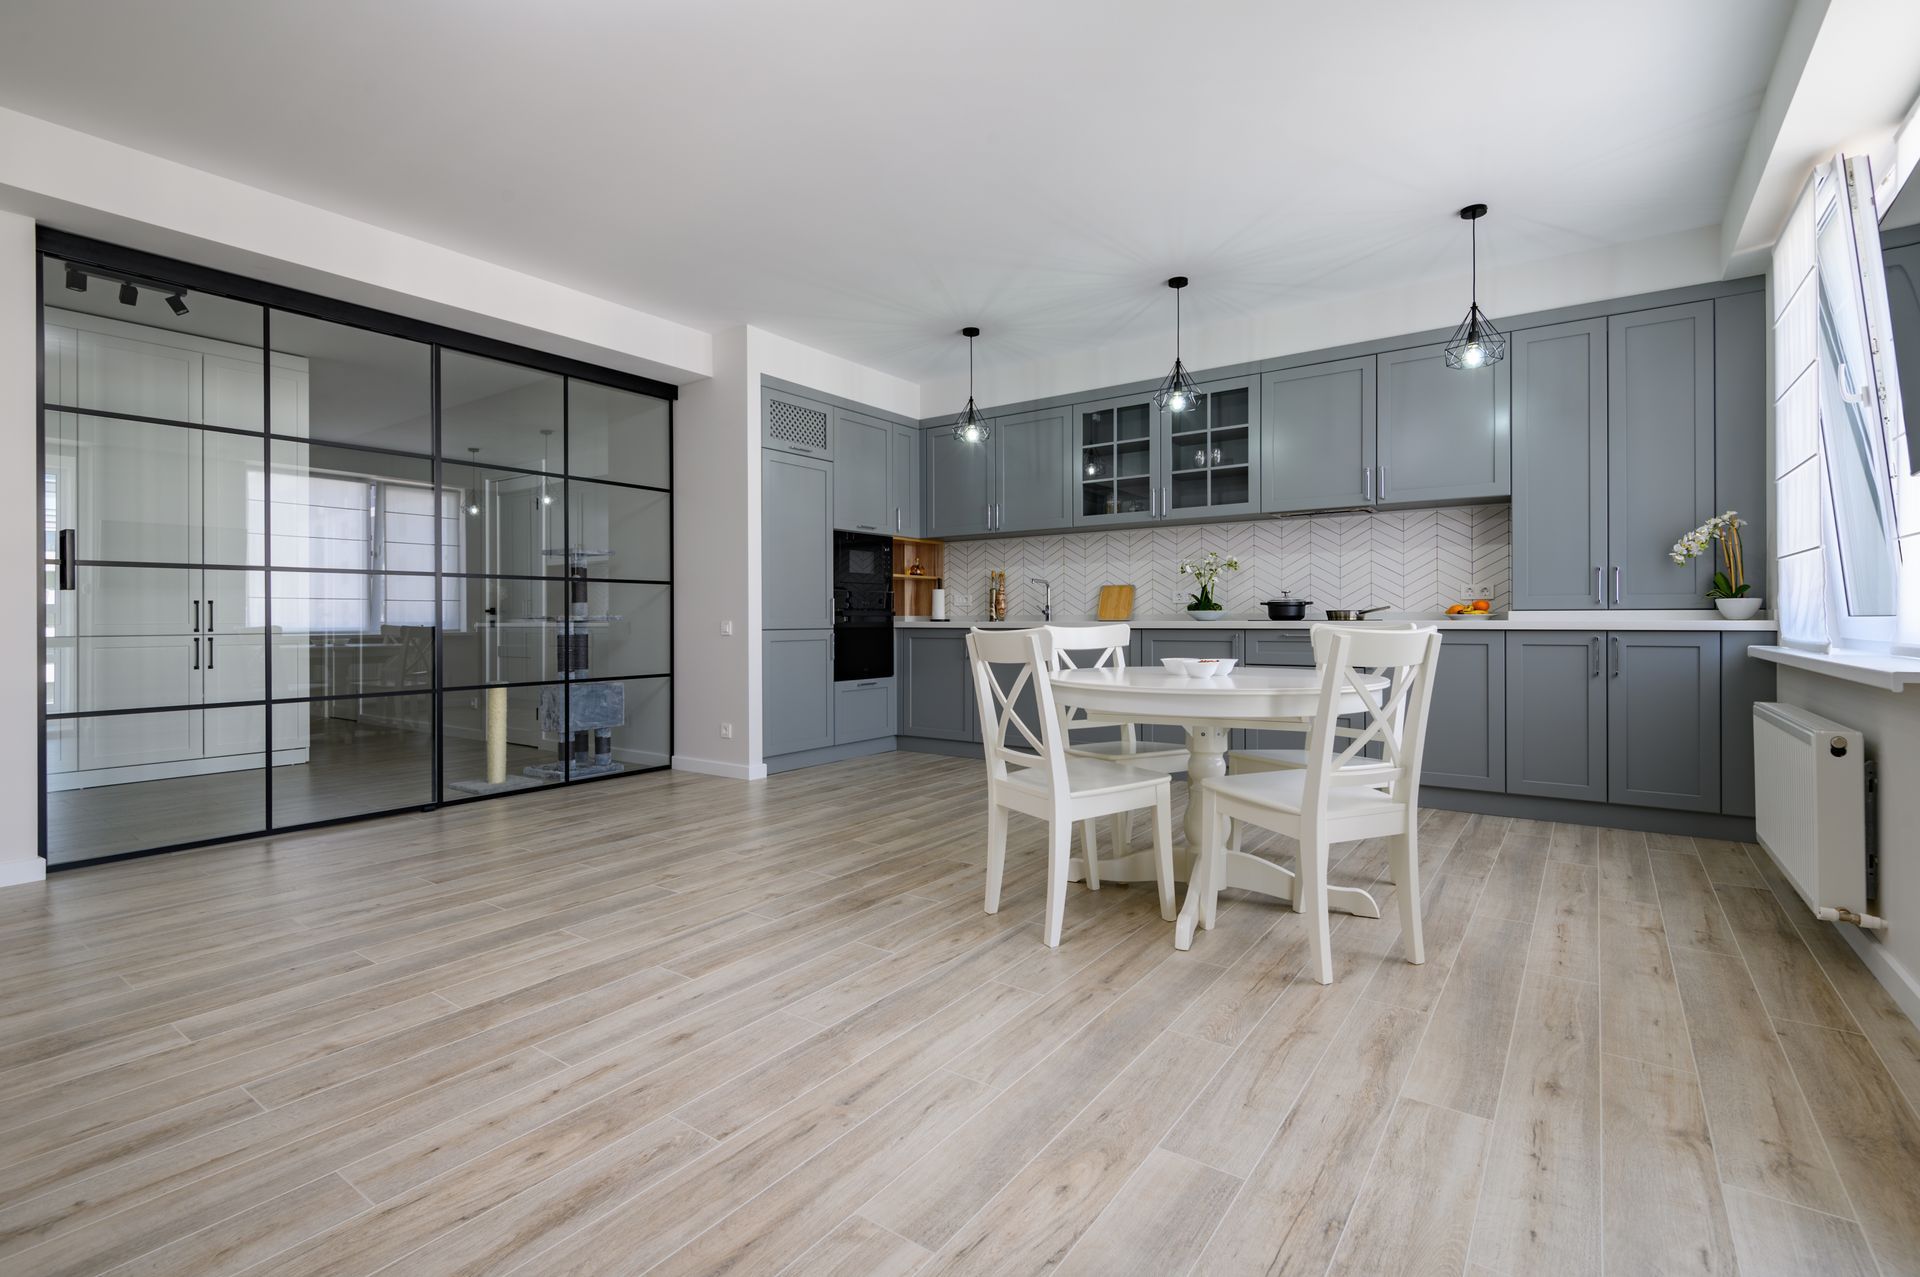 Trendy grey and white modern kitchen furniture